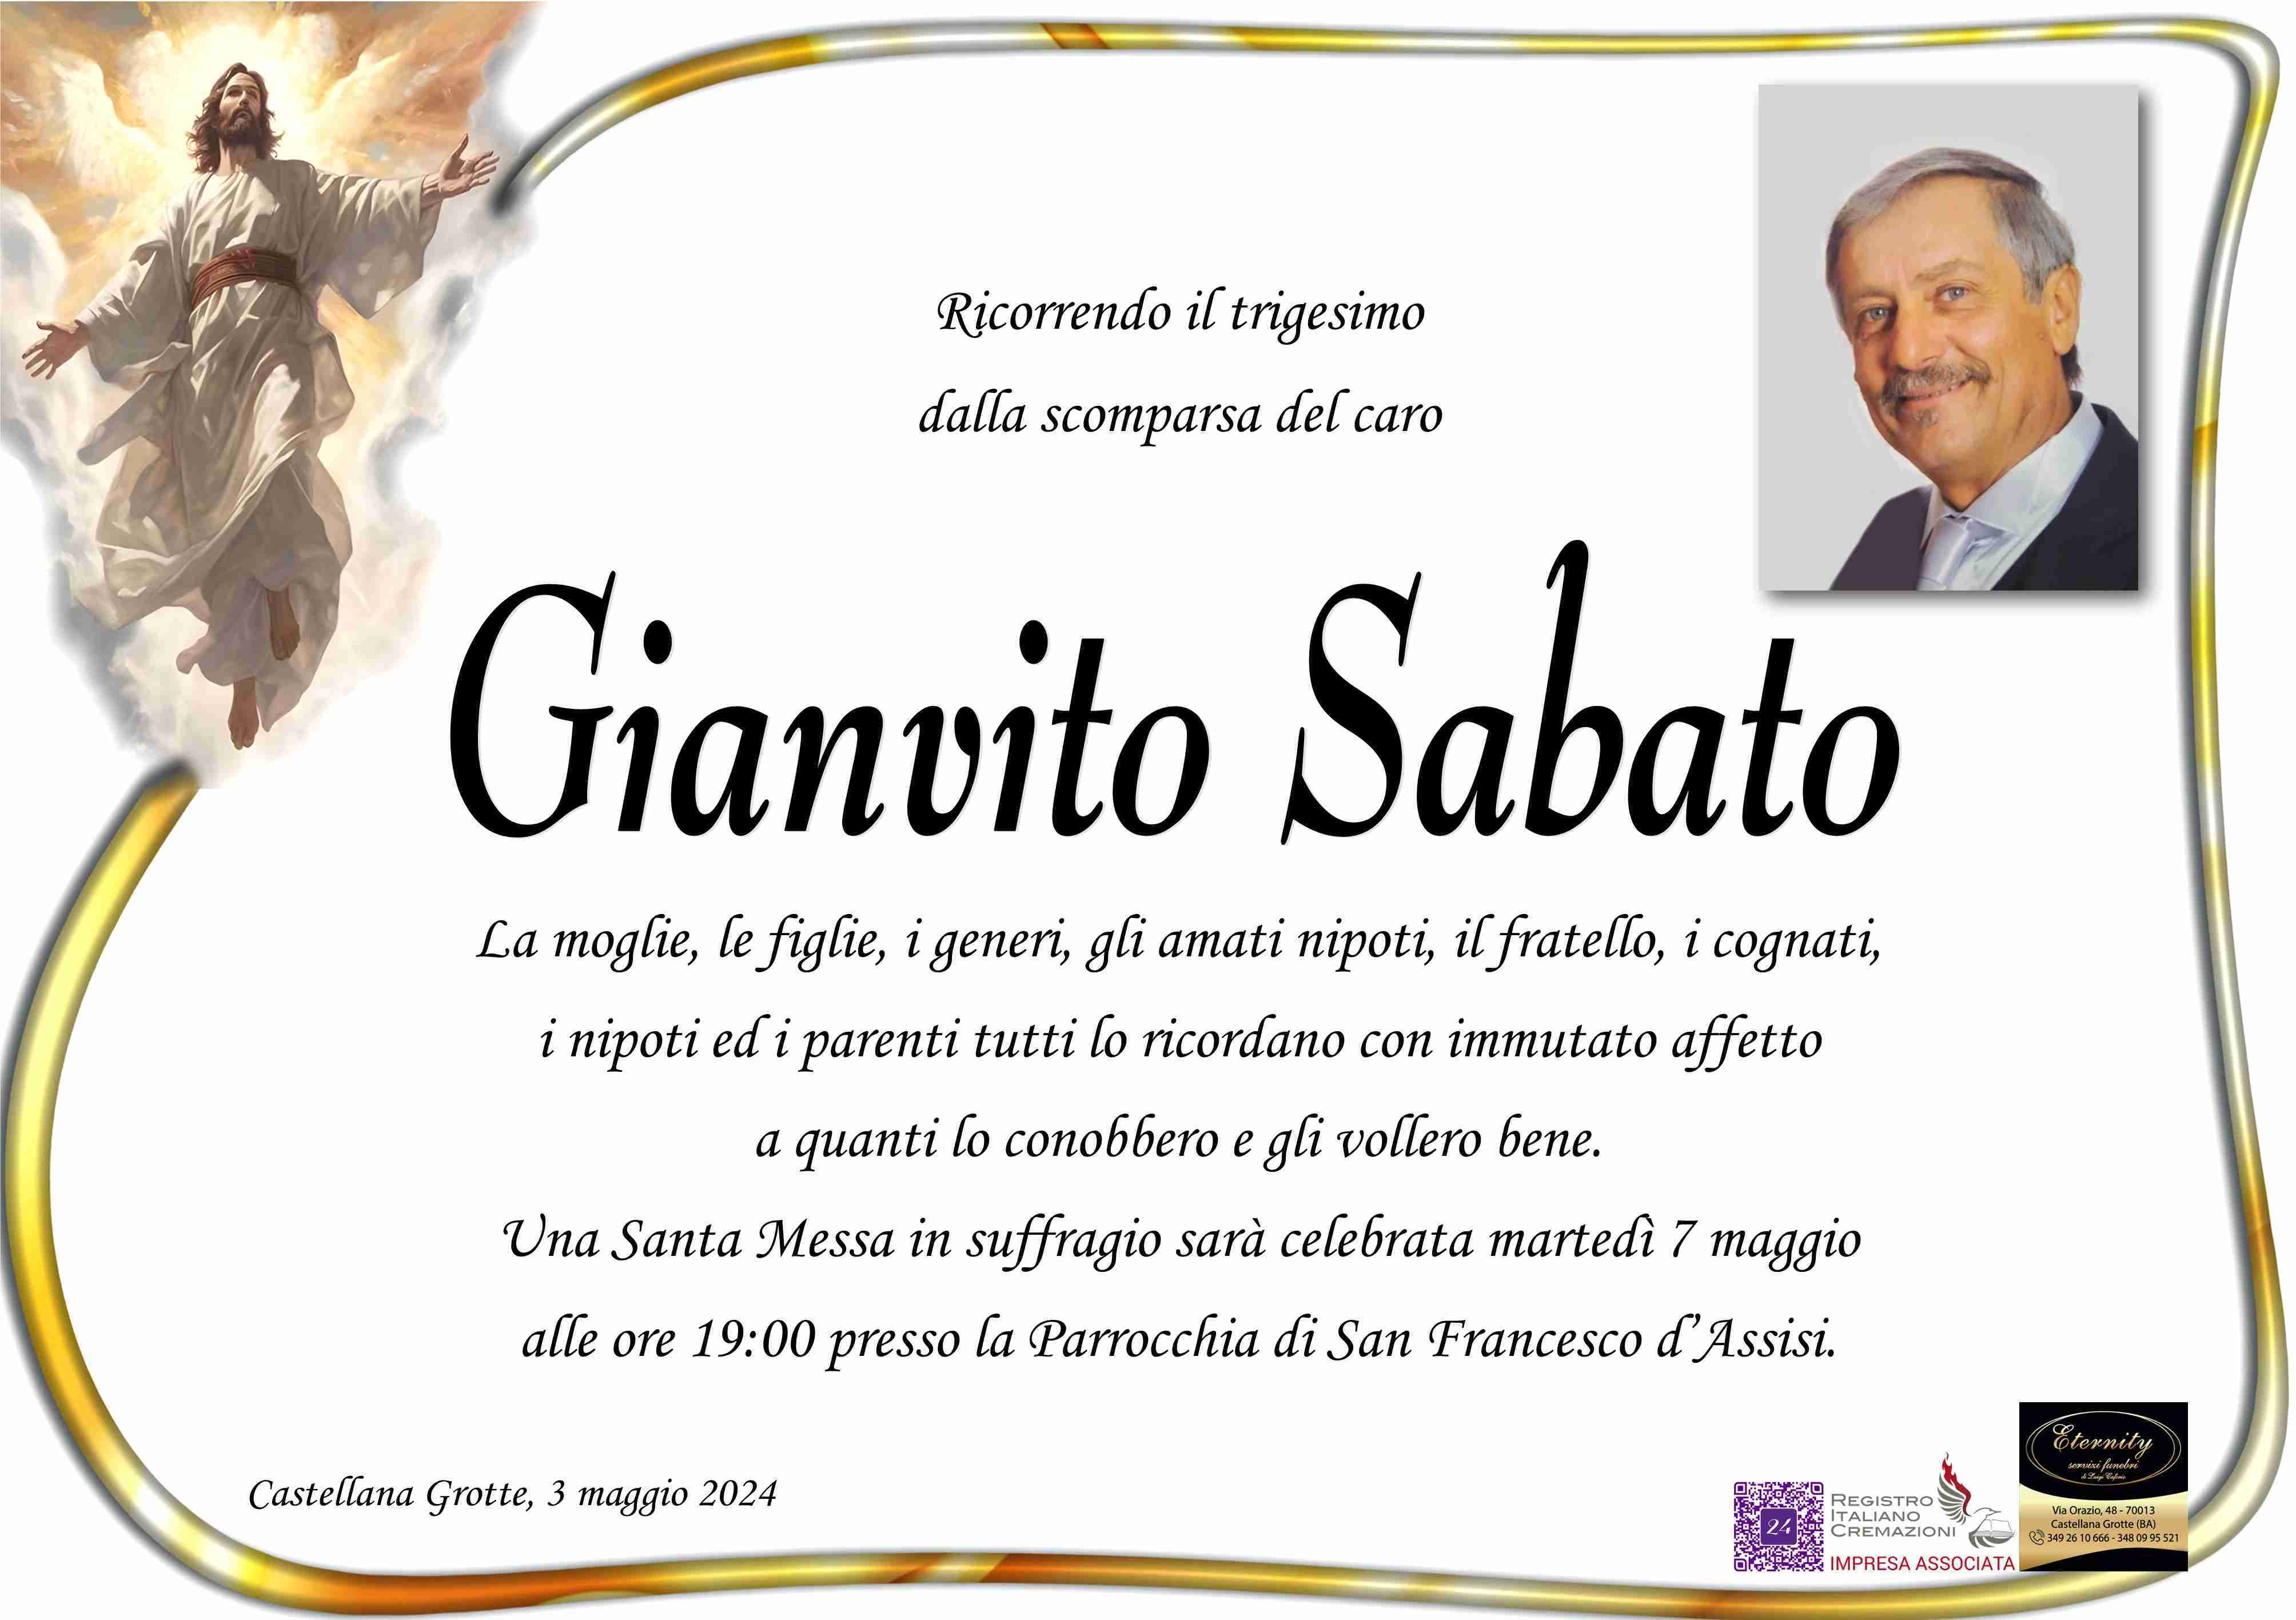 Gianvito Sabato